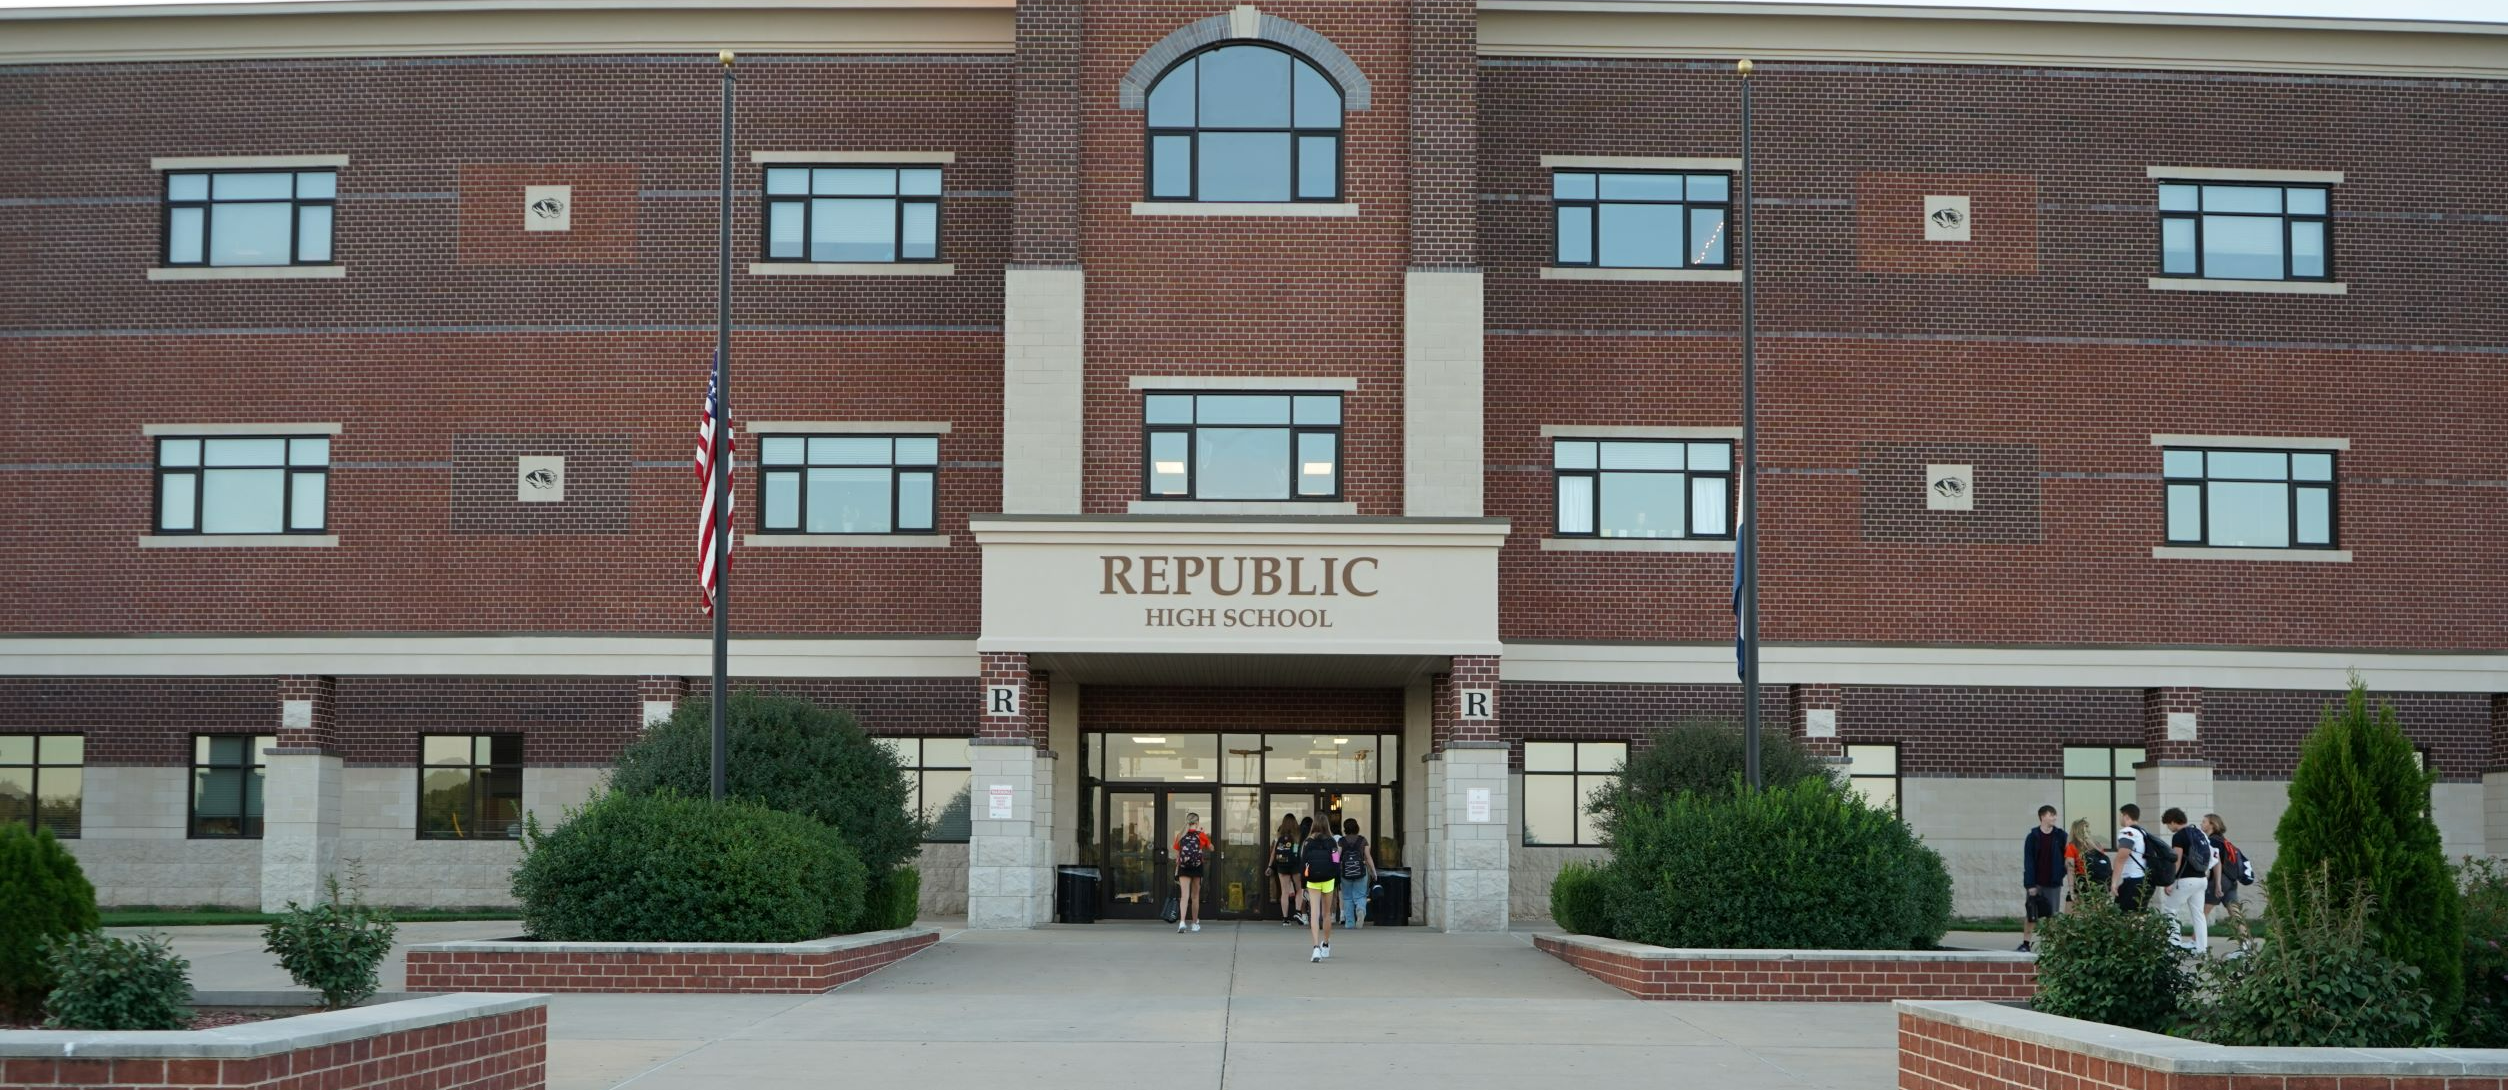 Republic High School building